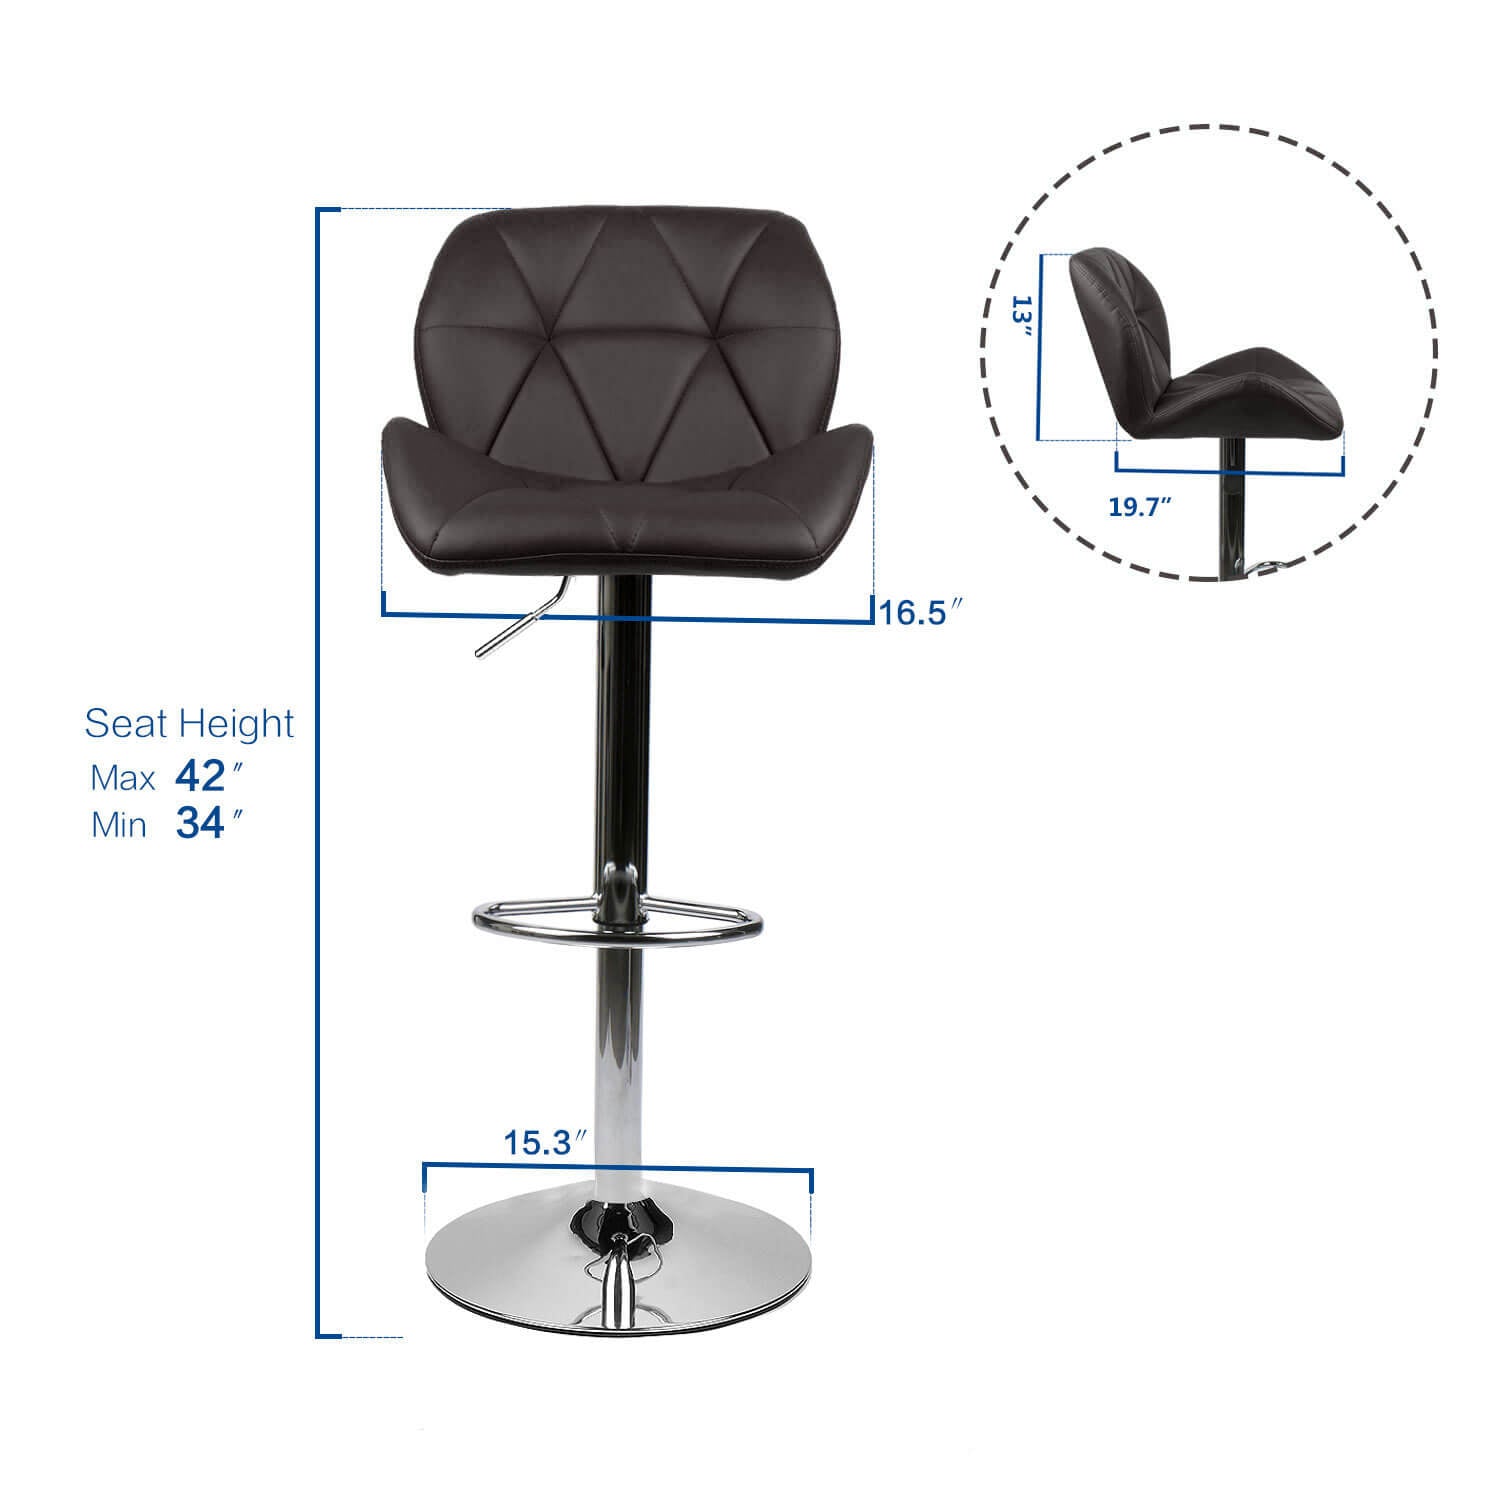 Elecwish brown bar stool OW001 size